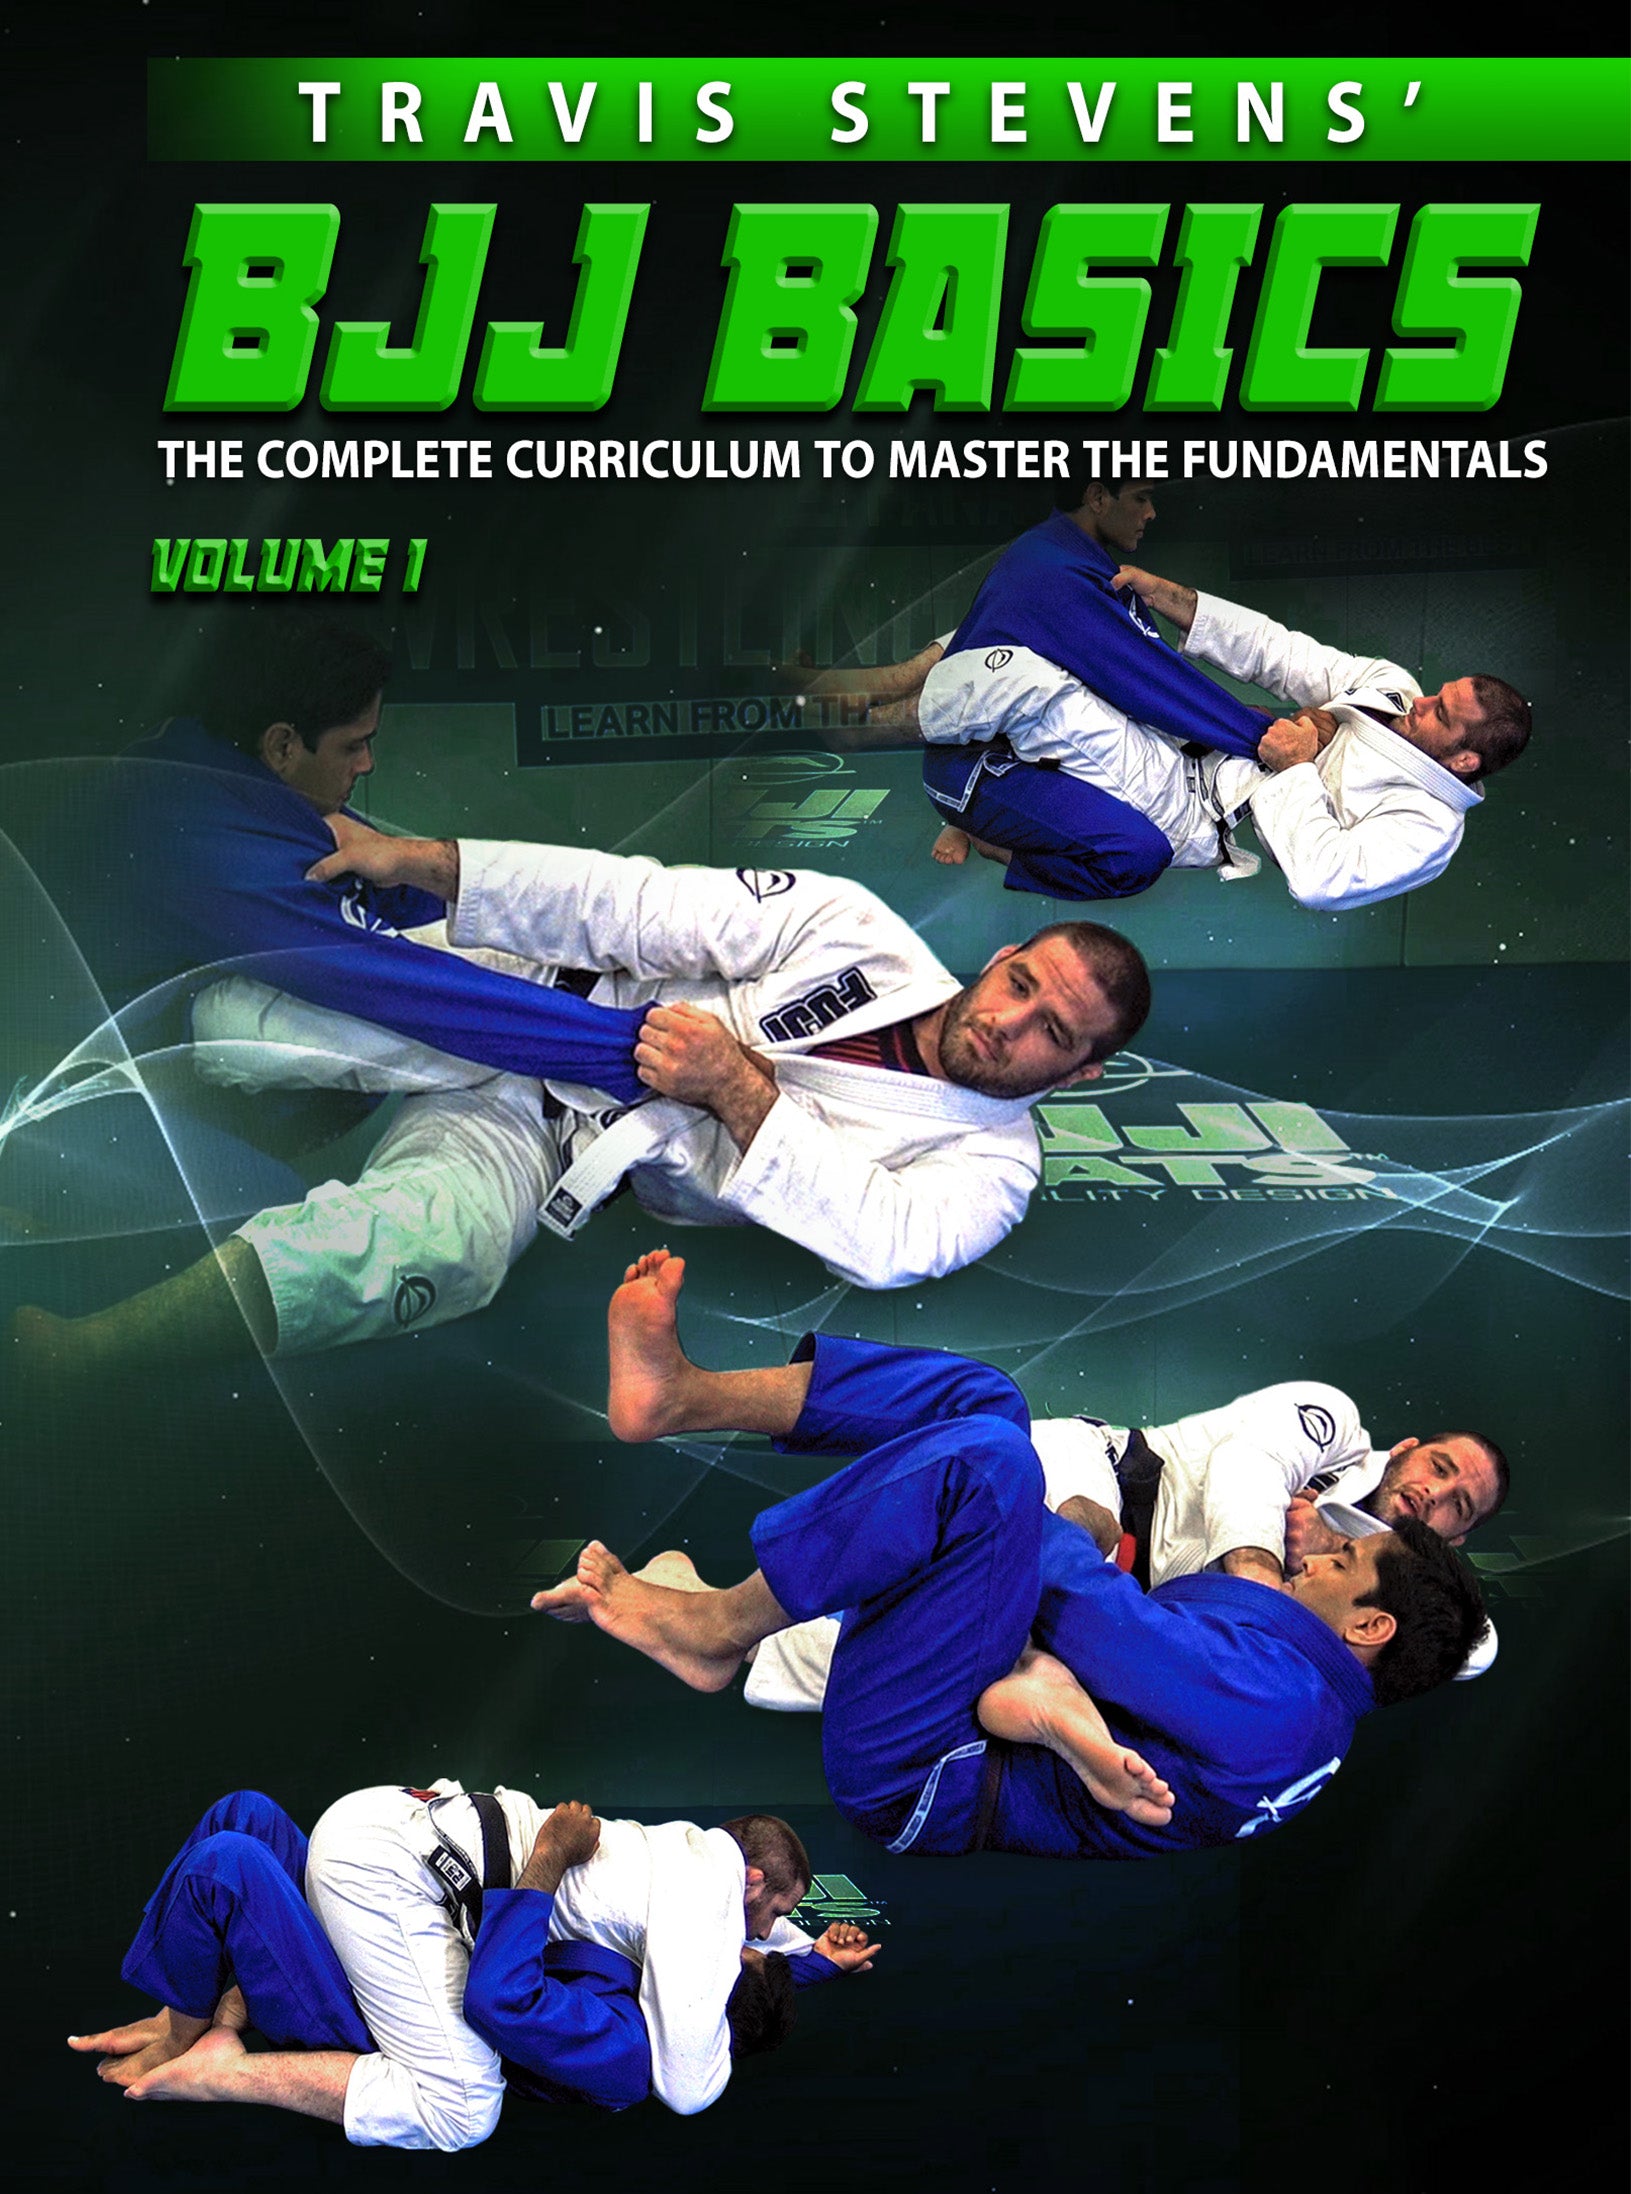 Fundamental Brazilian Jiu Jitsu Techniques by Migliaccio – BJJ Fanatics